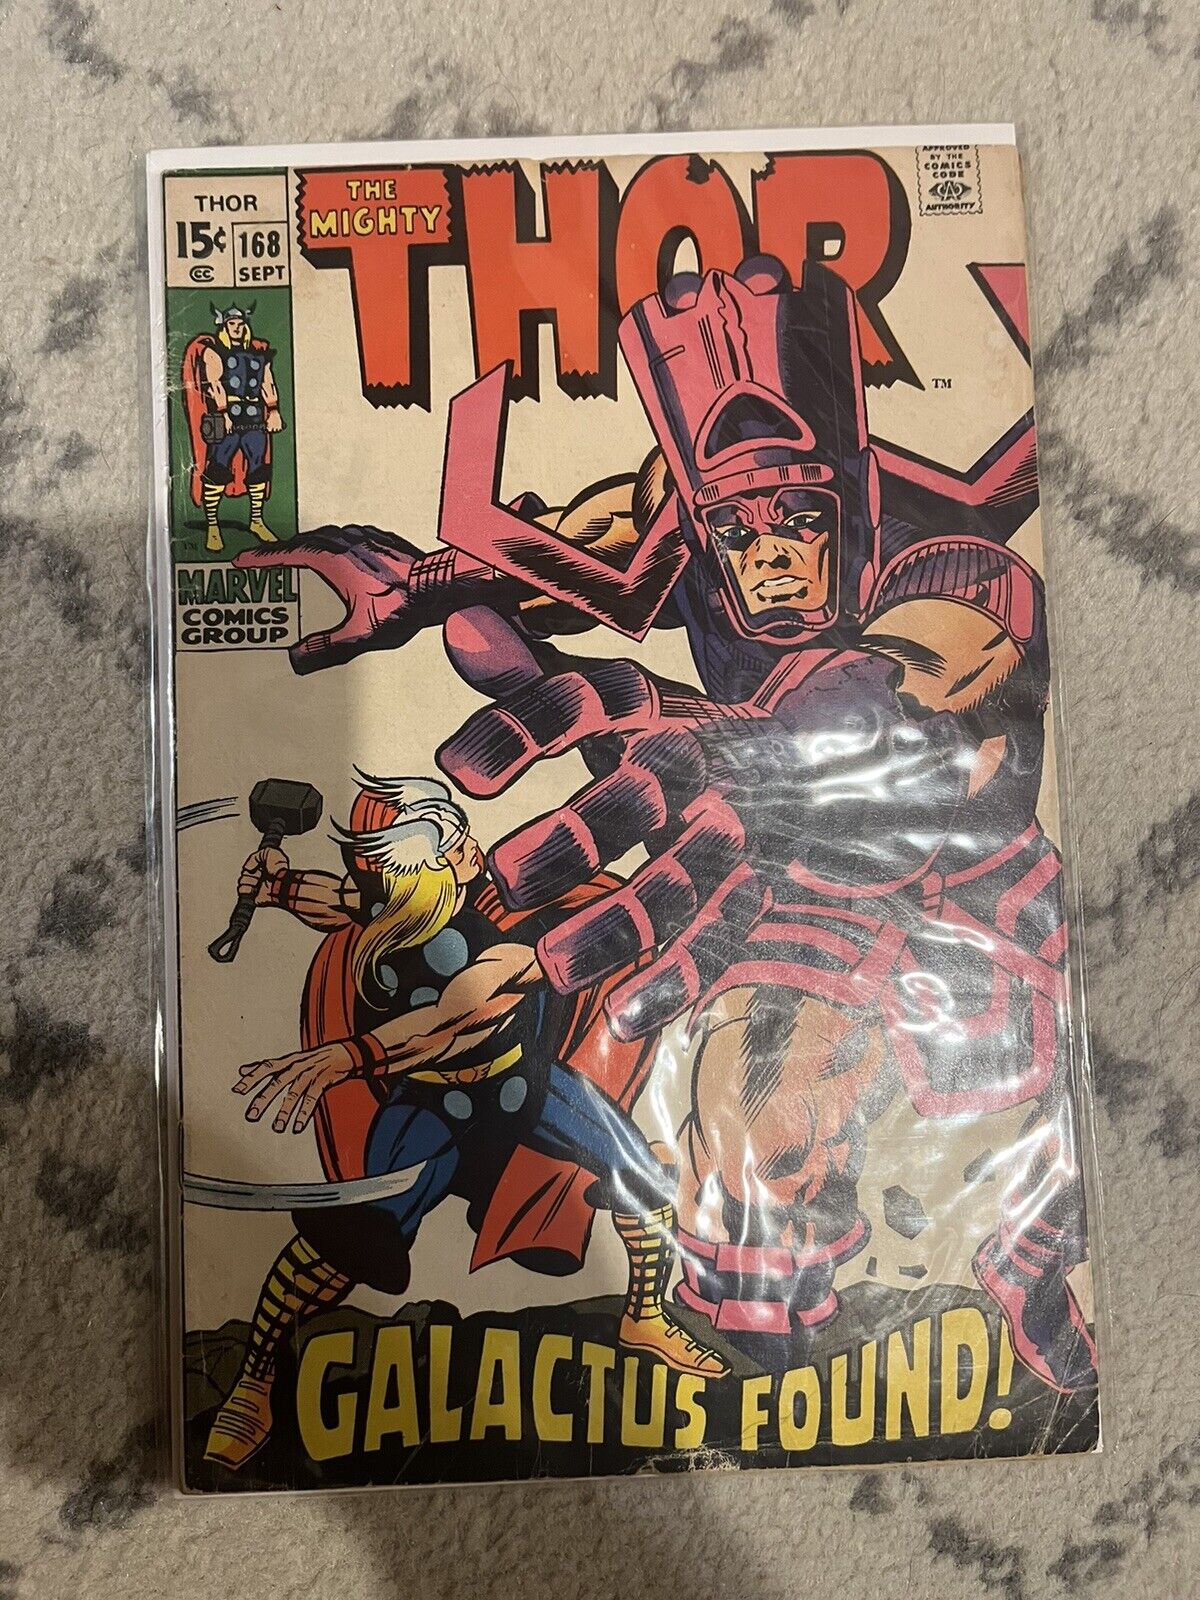 Mighty Thor #168, VG 4.0, 1969 Marvel Comics  Jack Kirby Art - Galactus Origin